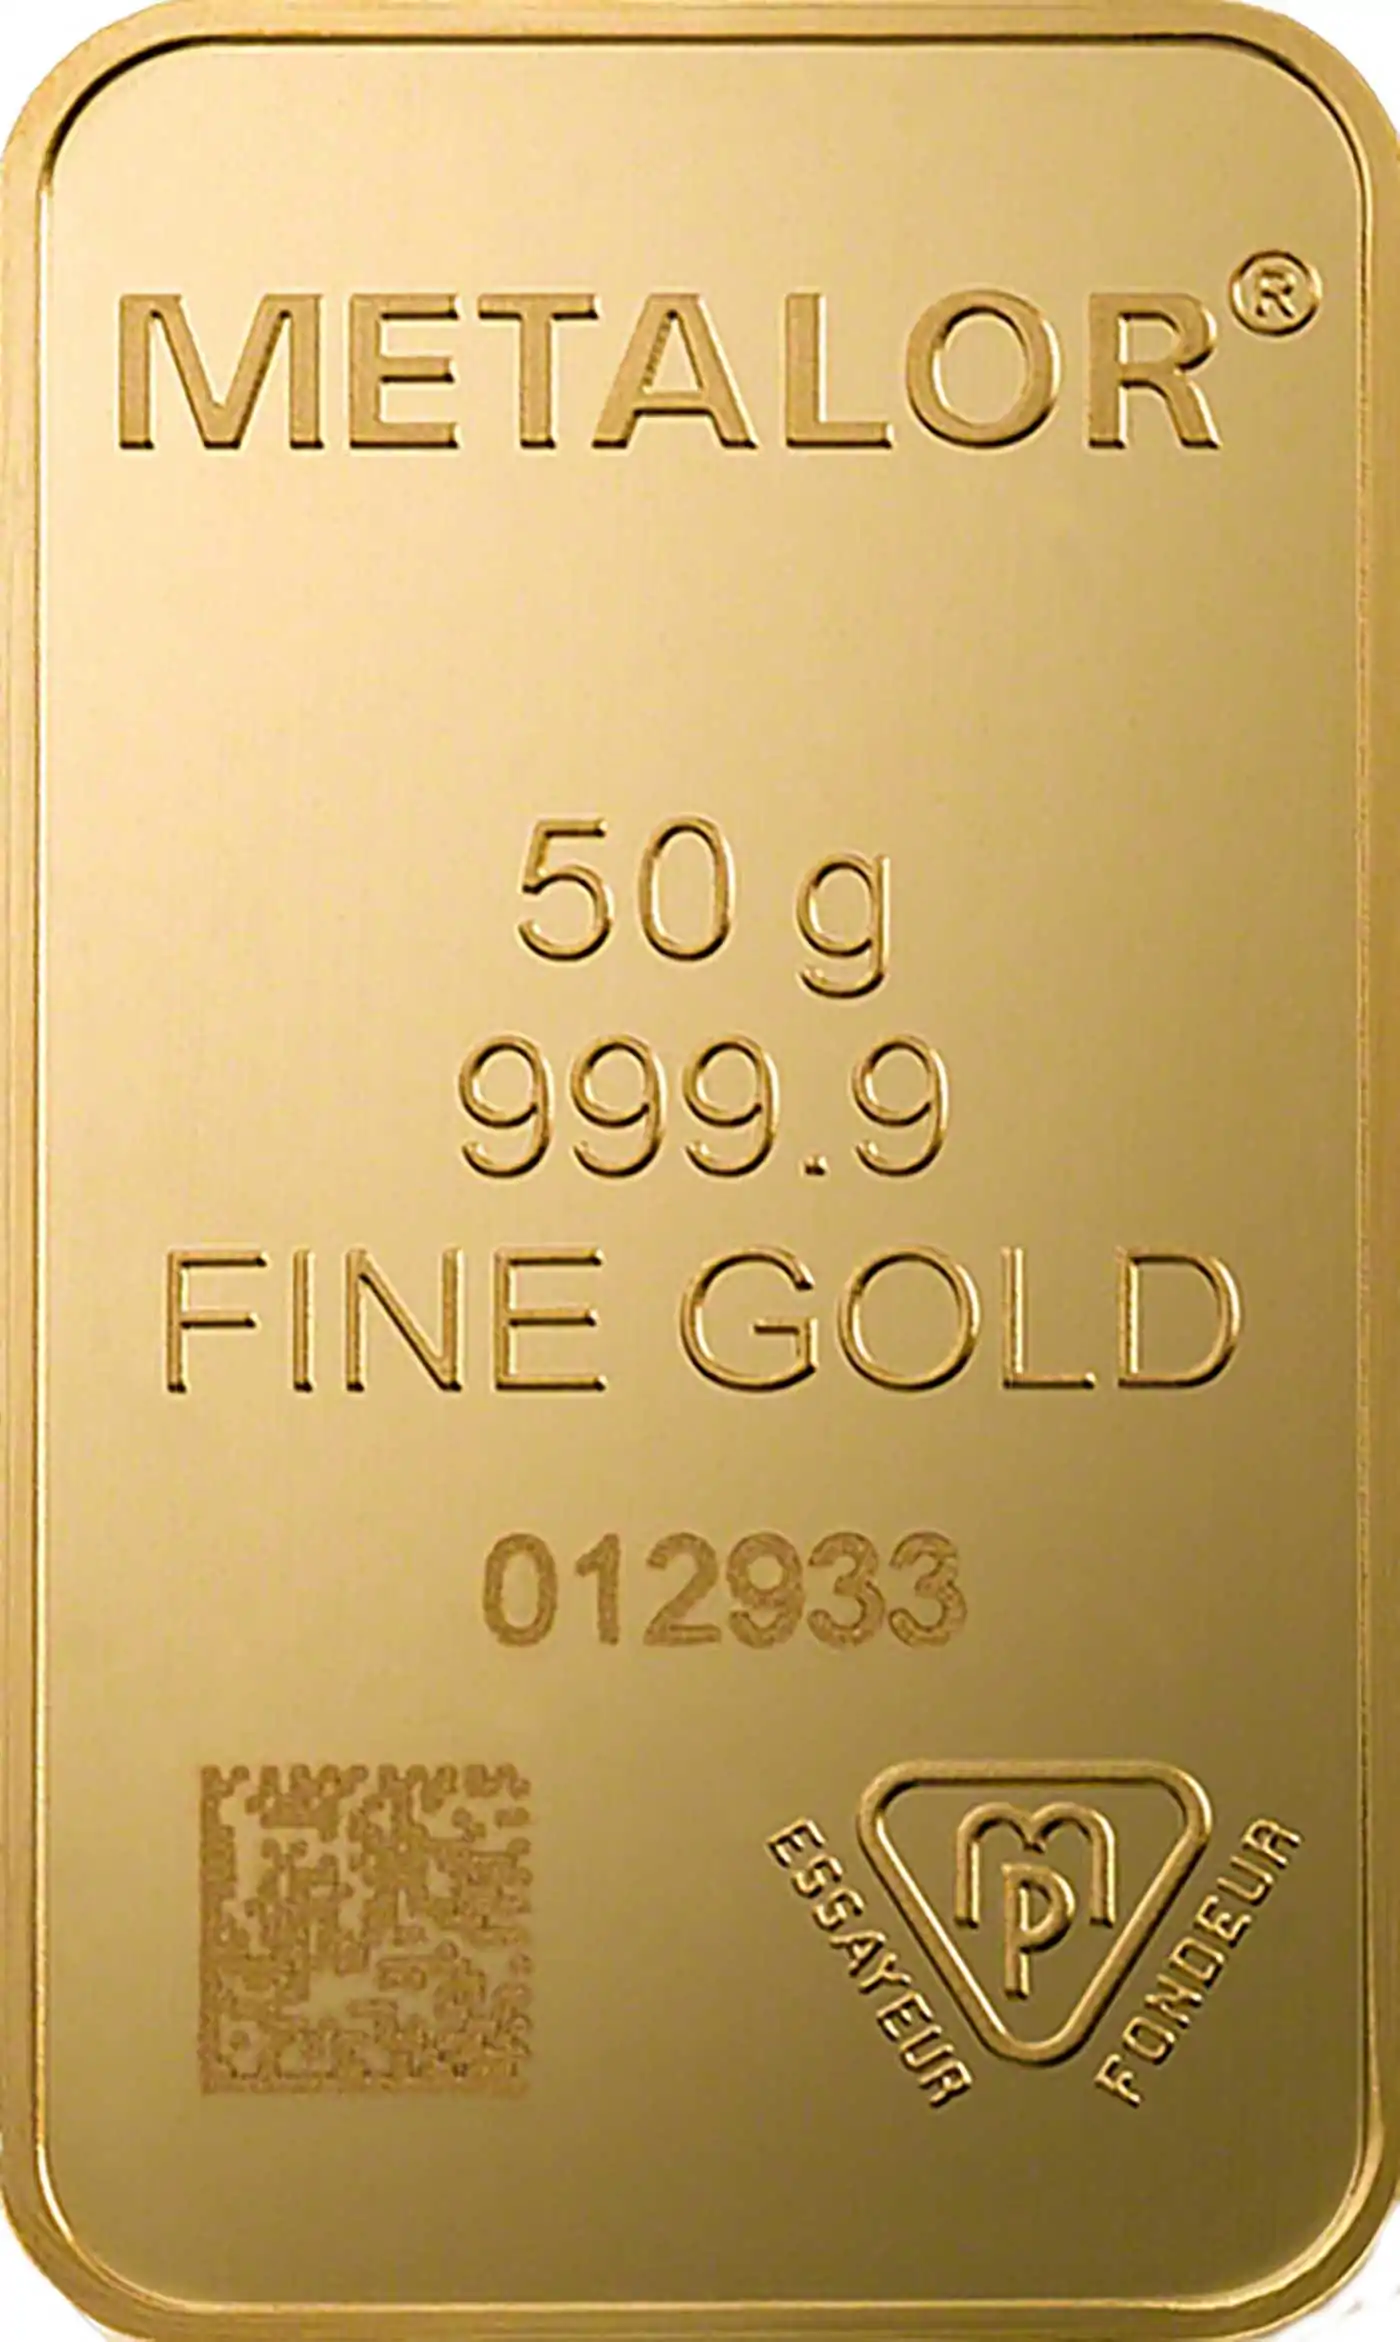 Złota sztabka 50 gramów Metalor